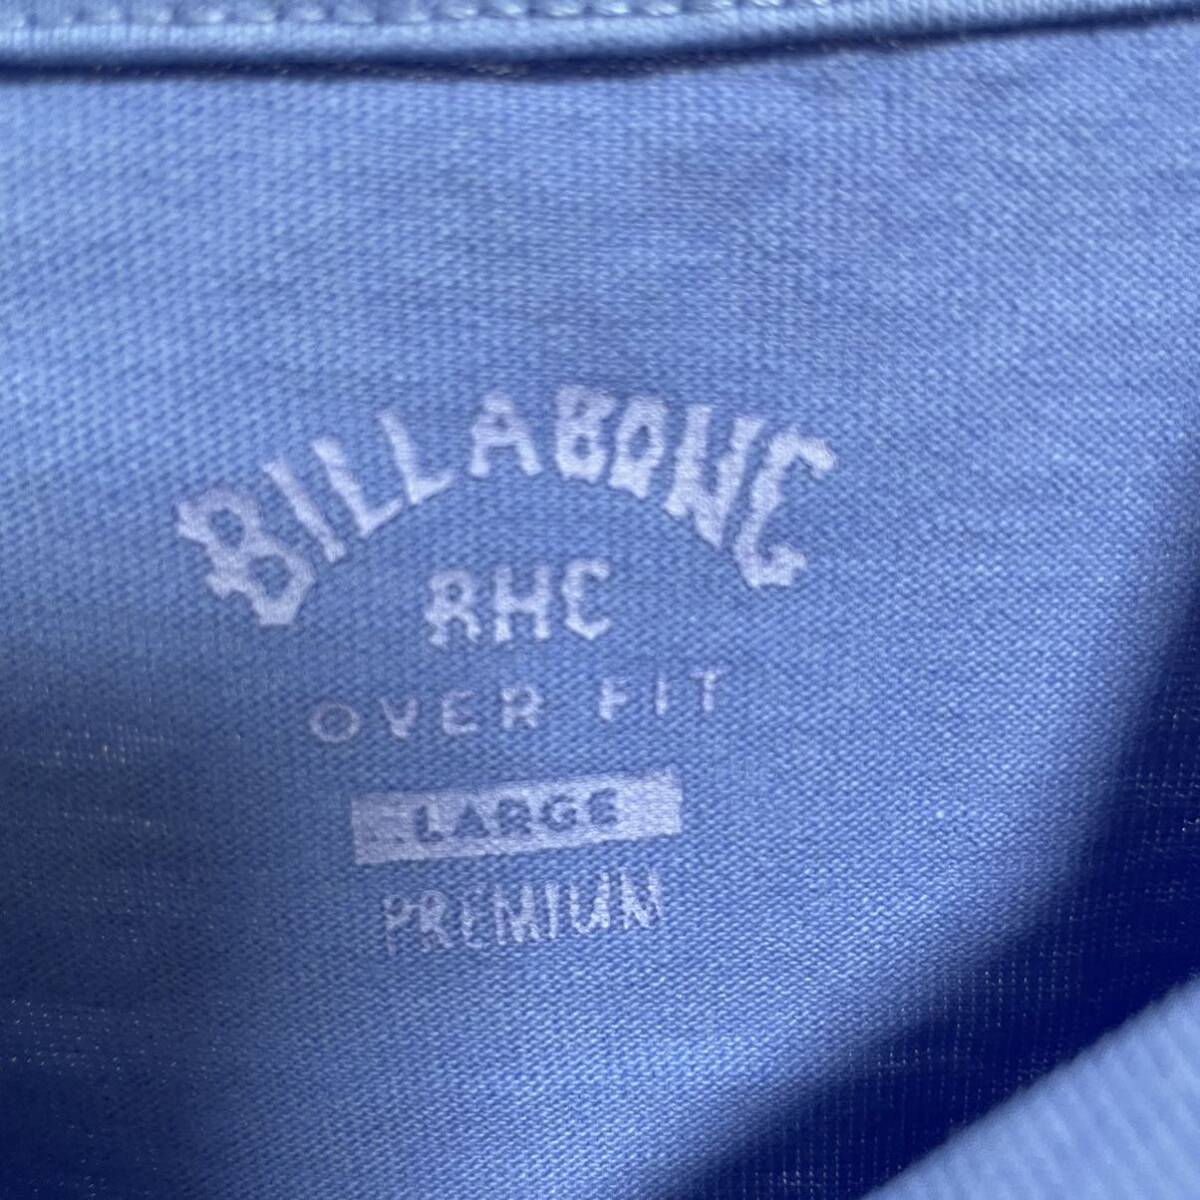 RHC × BILLABONG Logo Tee【Lサイズ】ロゴティー 半袖 Tシャツ ブルー アーチロゴ ビラボン ロンハーマン 別注 ポケットT【新品未着用】